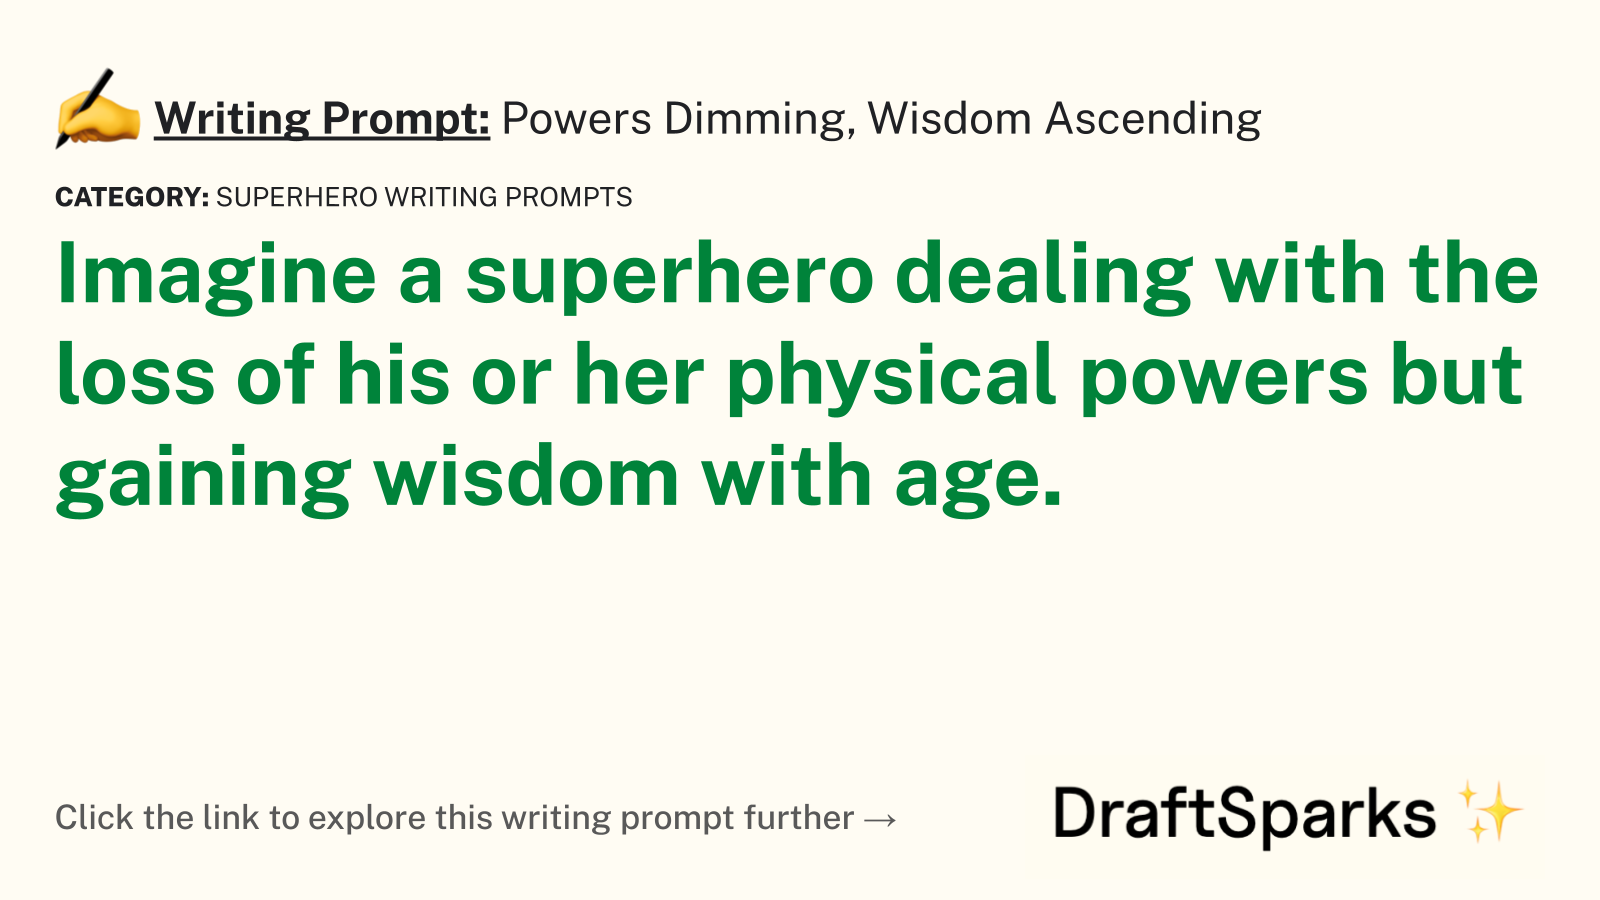 Powers Dimming, Wisdom Ascending